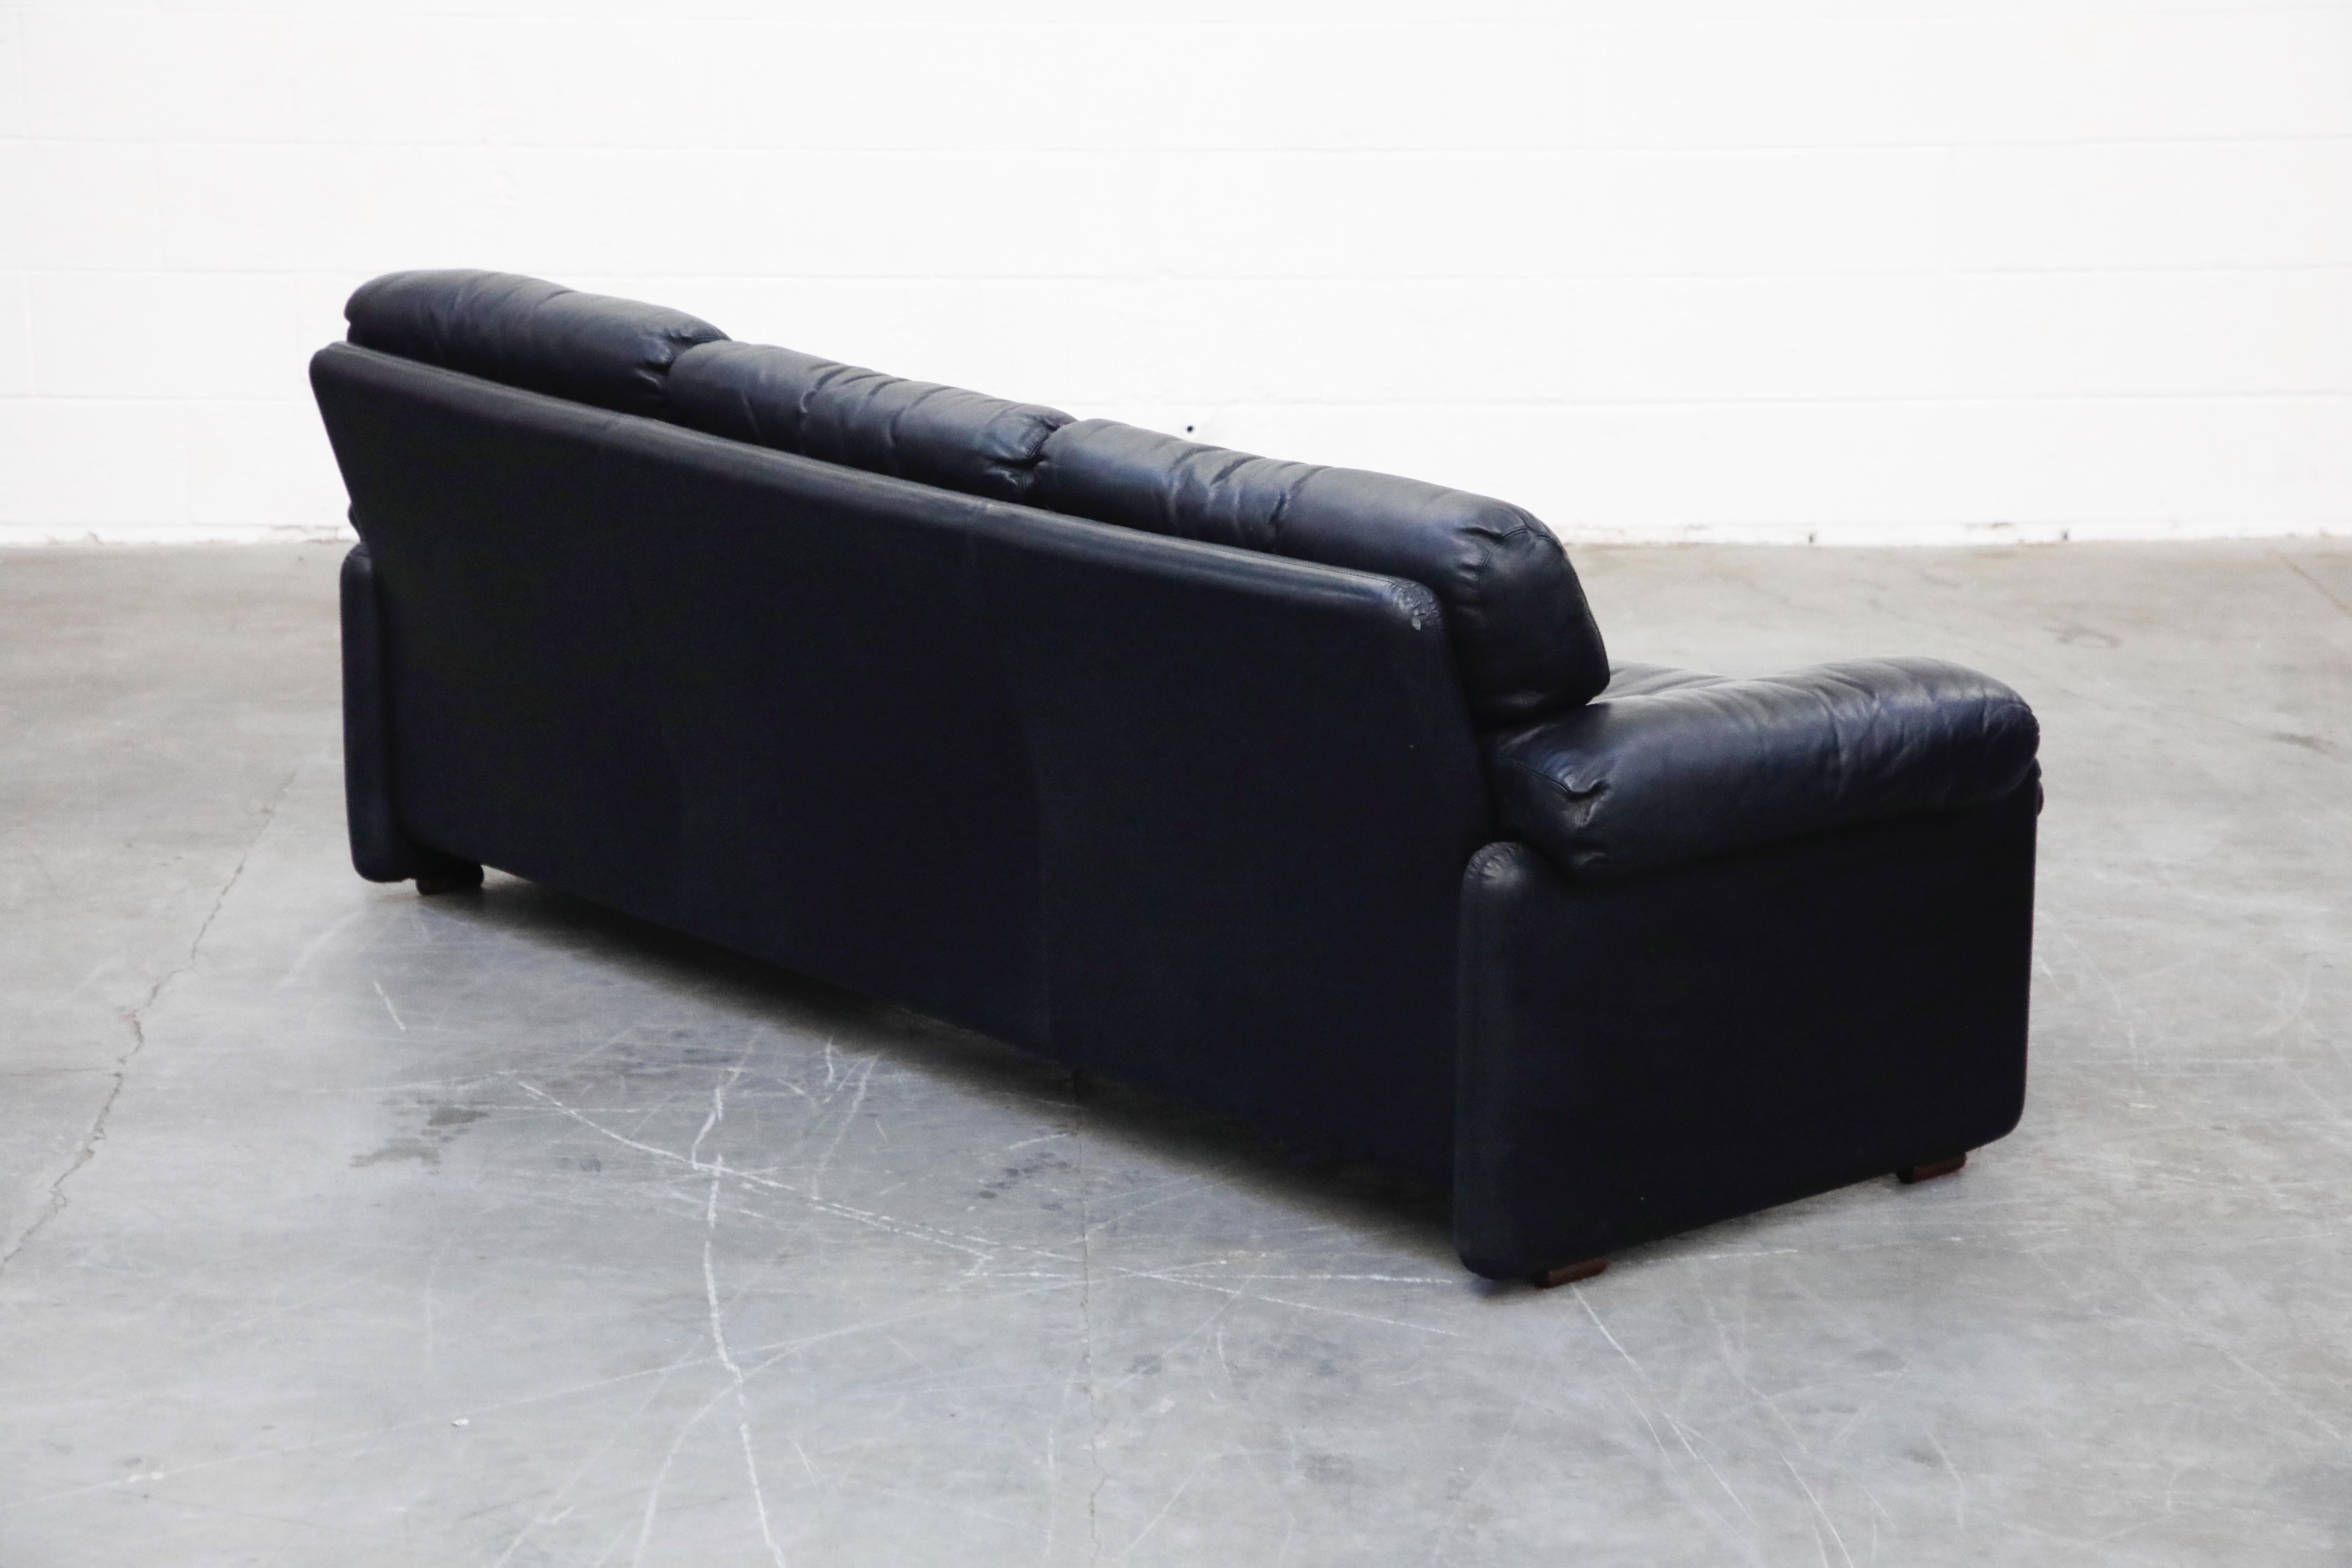 Late 20th Century Coronado Sofa in Black Leather by Afra & Tobia Scarpa for B&B Italia, circa 1980